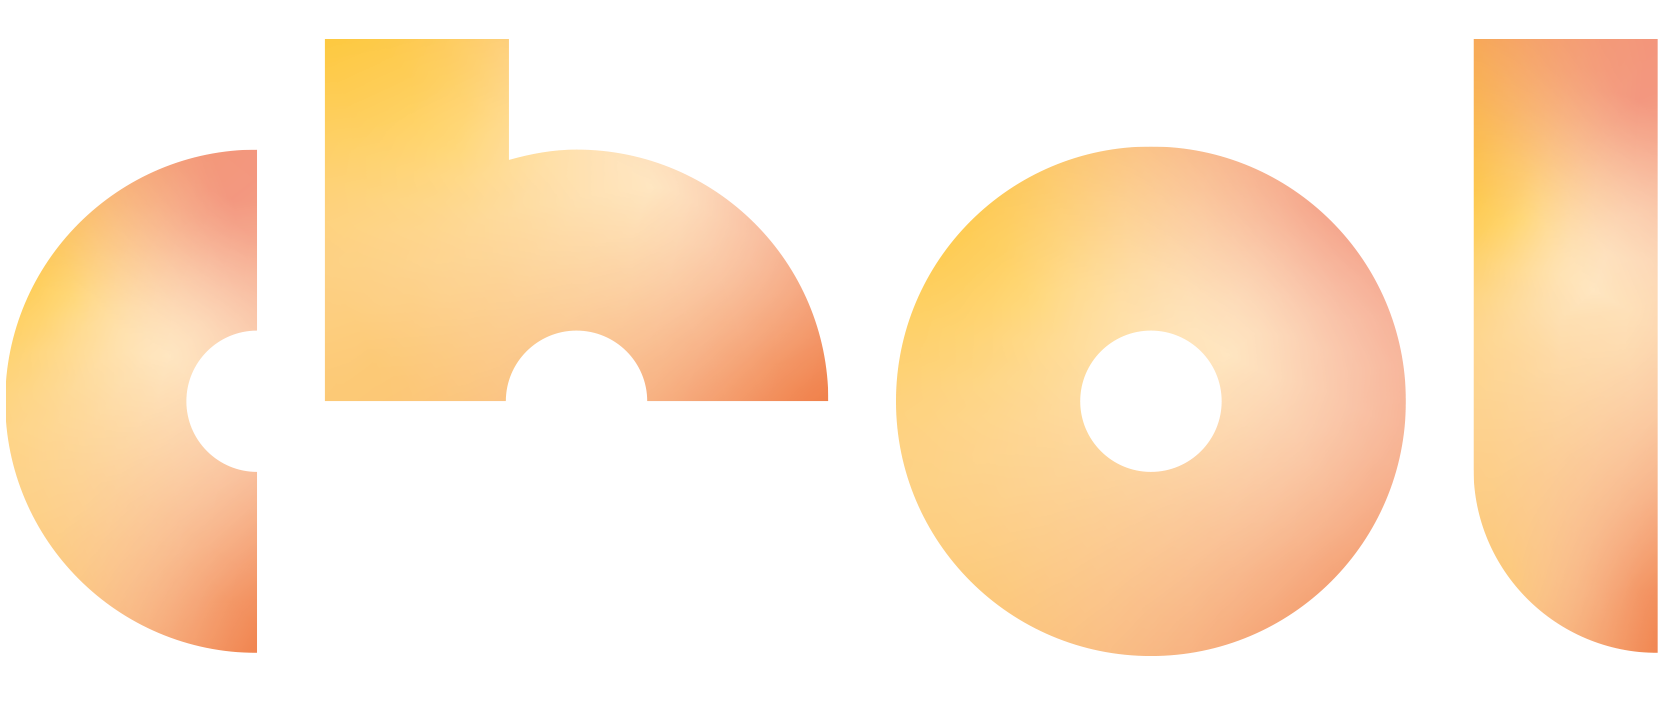 logo for Chol